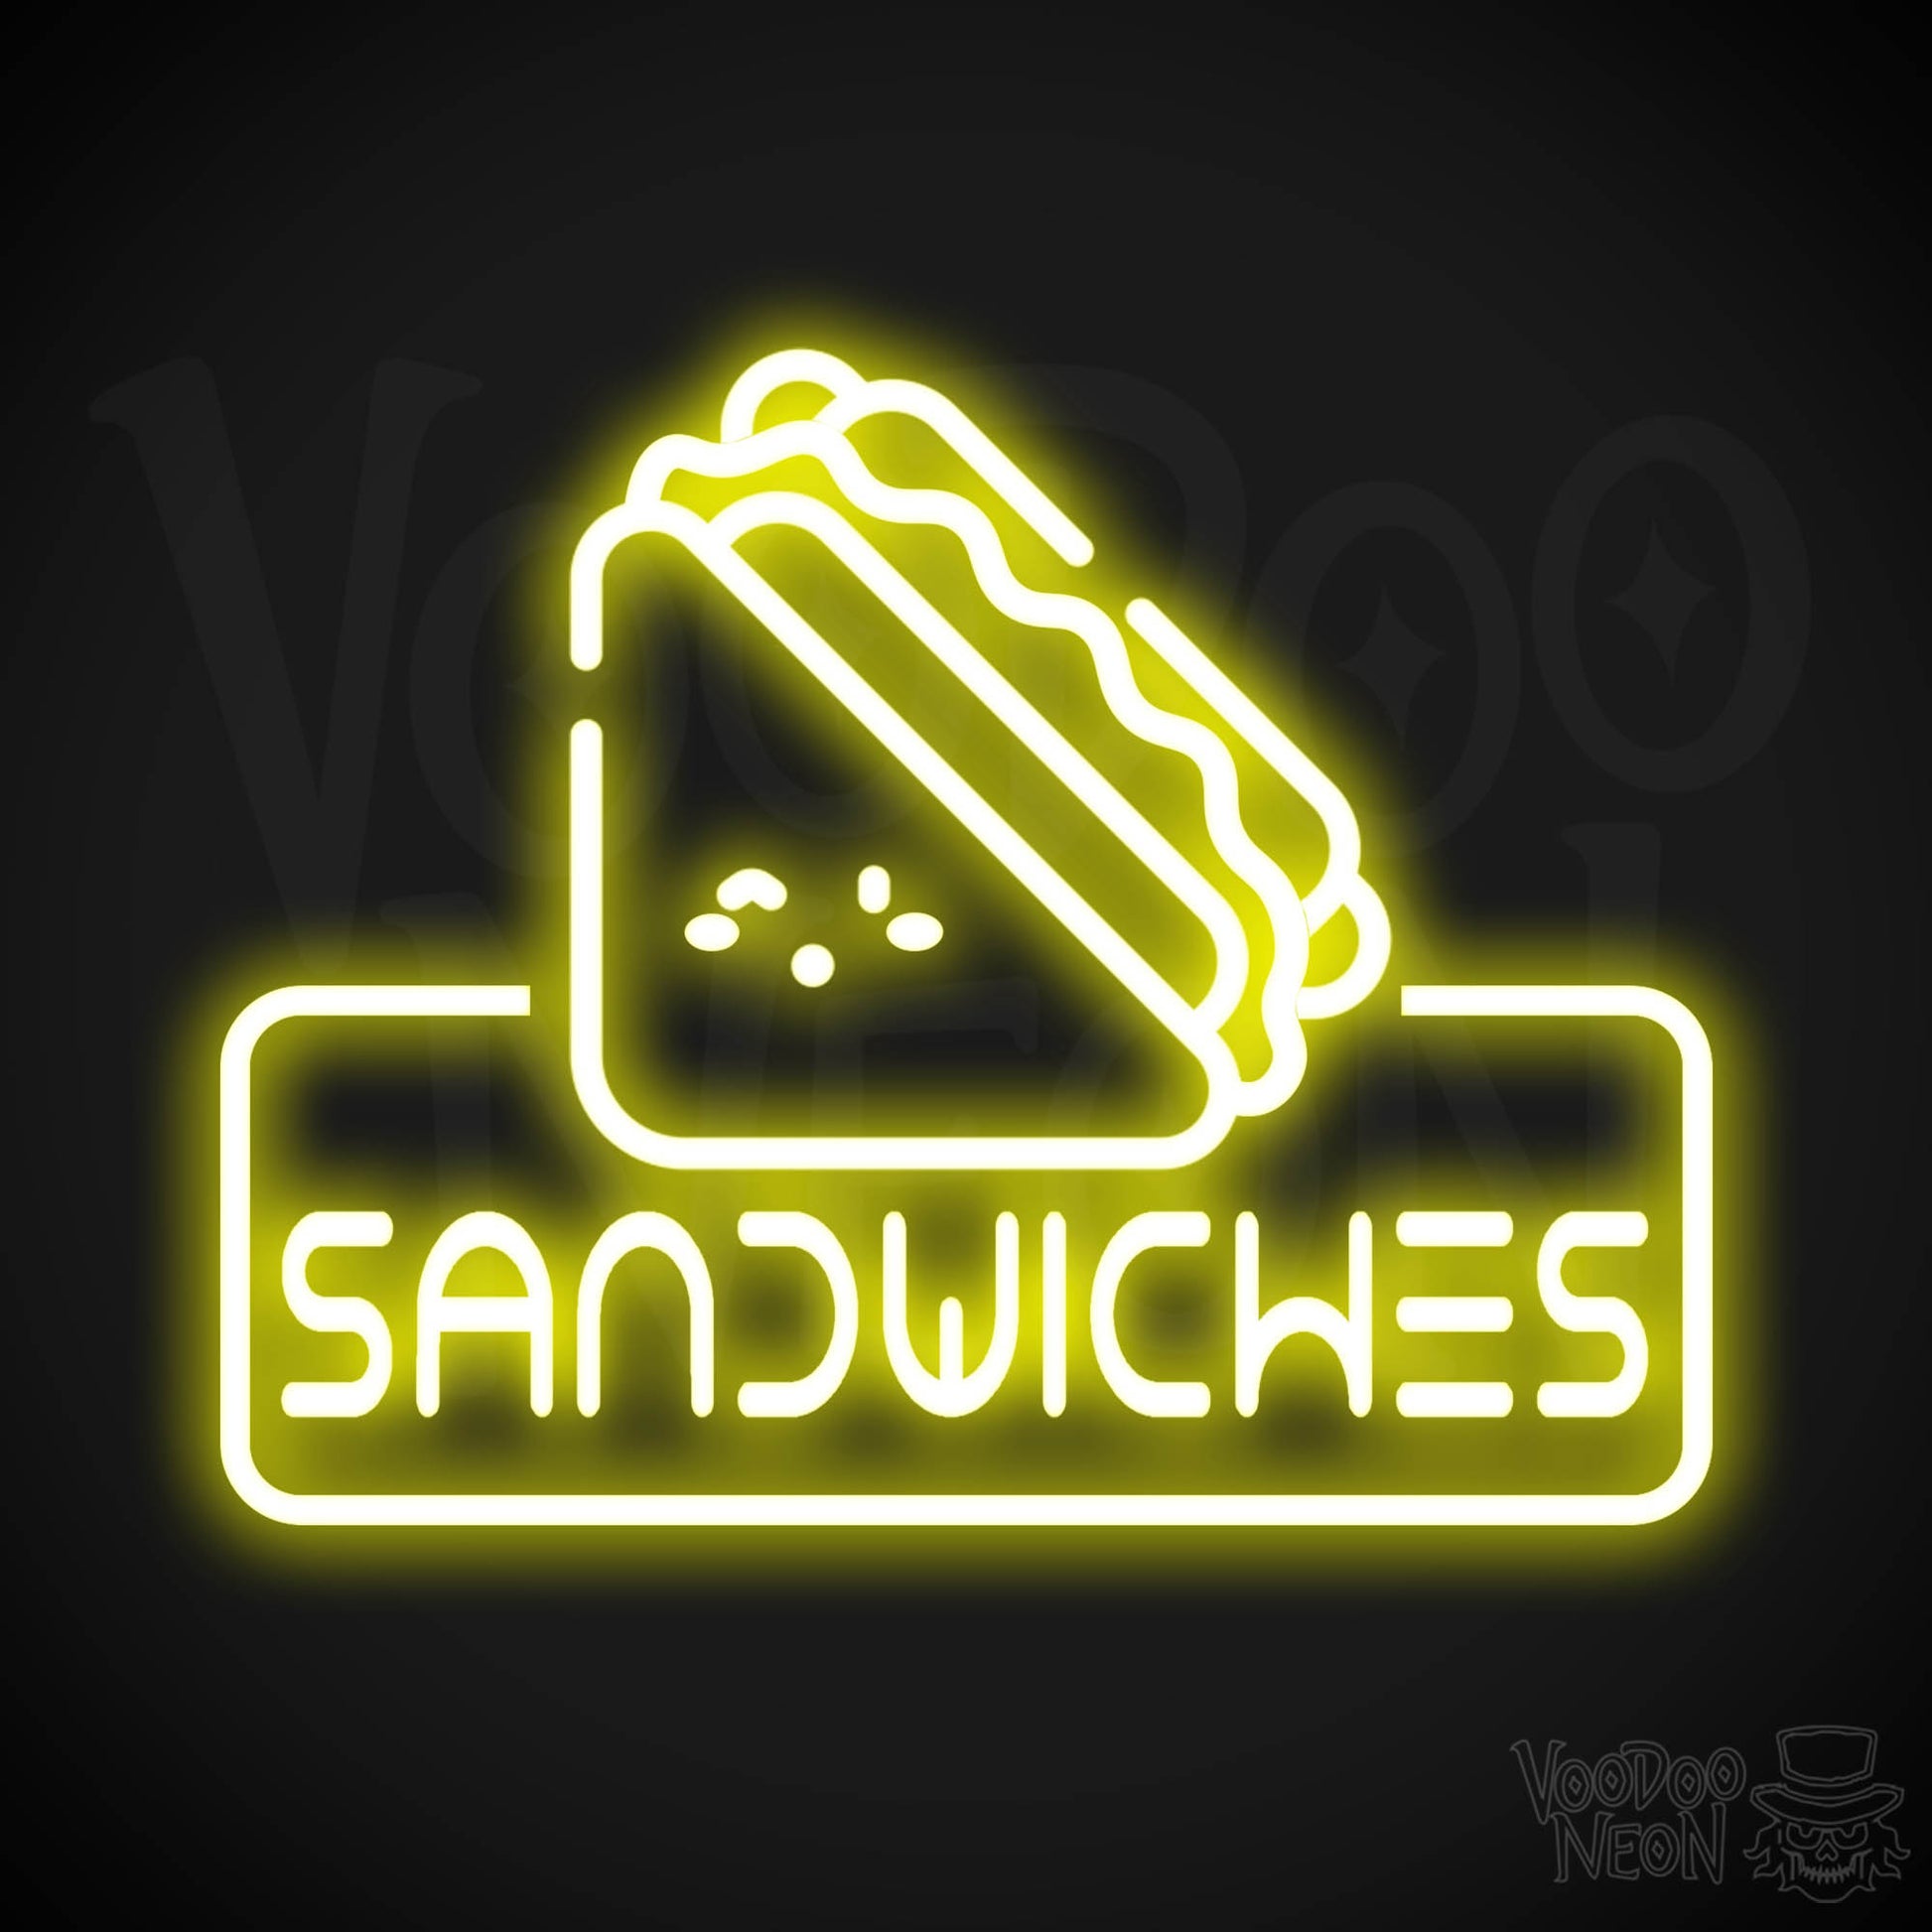 Neon Sandwiches Sign - Sandwich Neon Sign - Neon Sandwich Shop Sign - Color Yellow